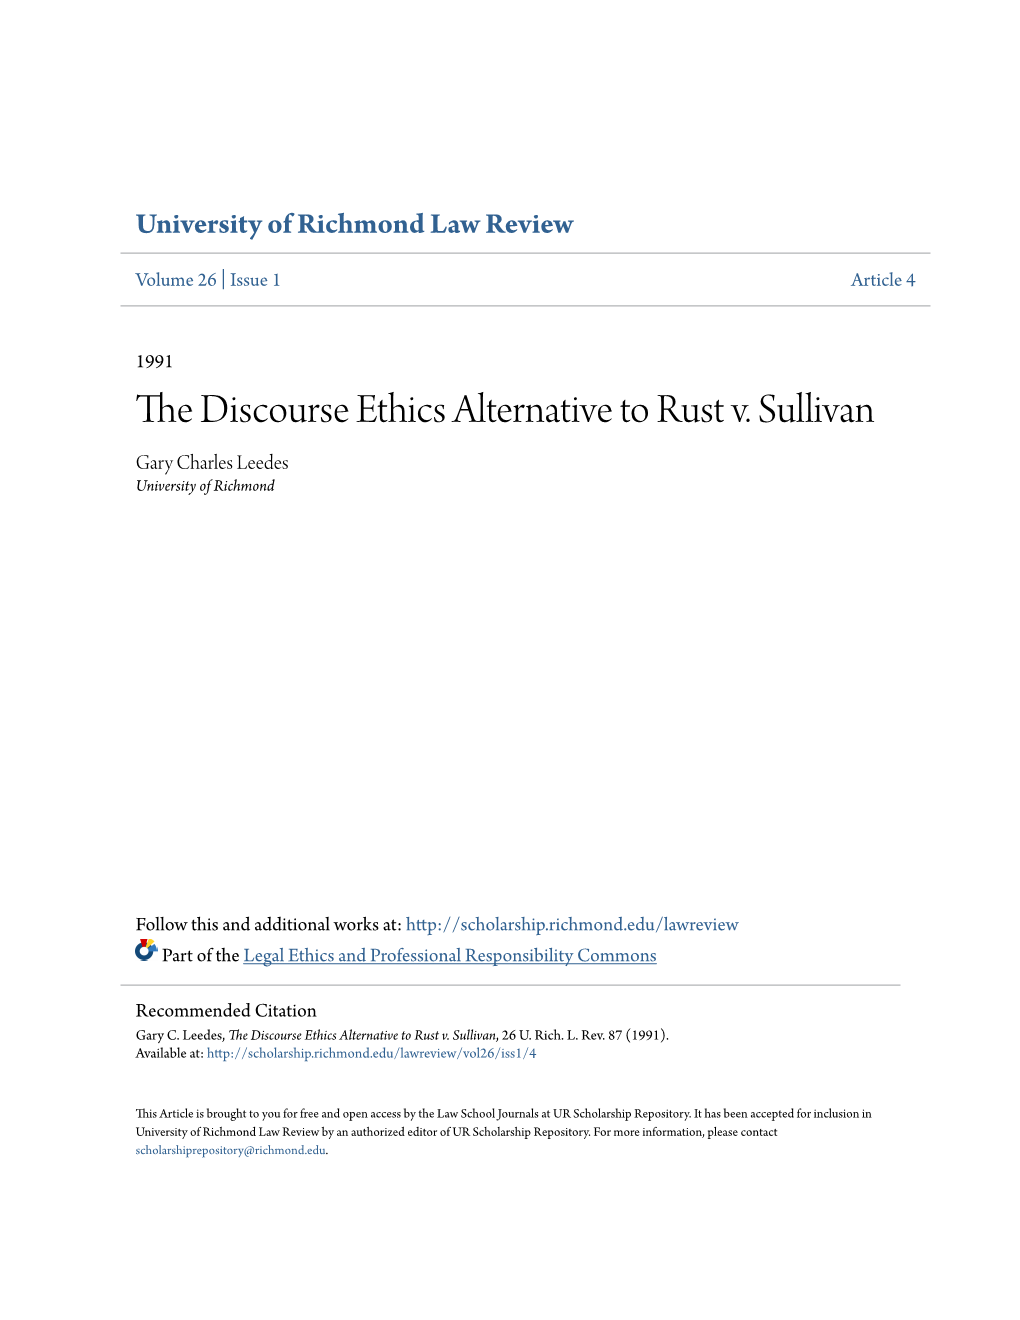 The Discourse Ethics Alternative to Rust V. Sullivan Gary Charles Leedes University of Richmond